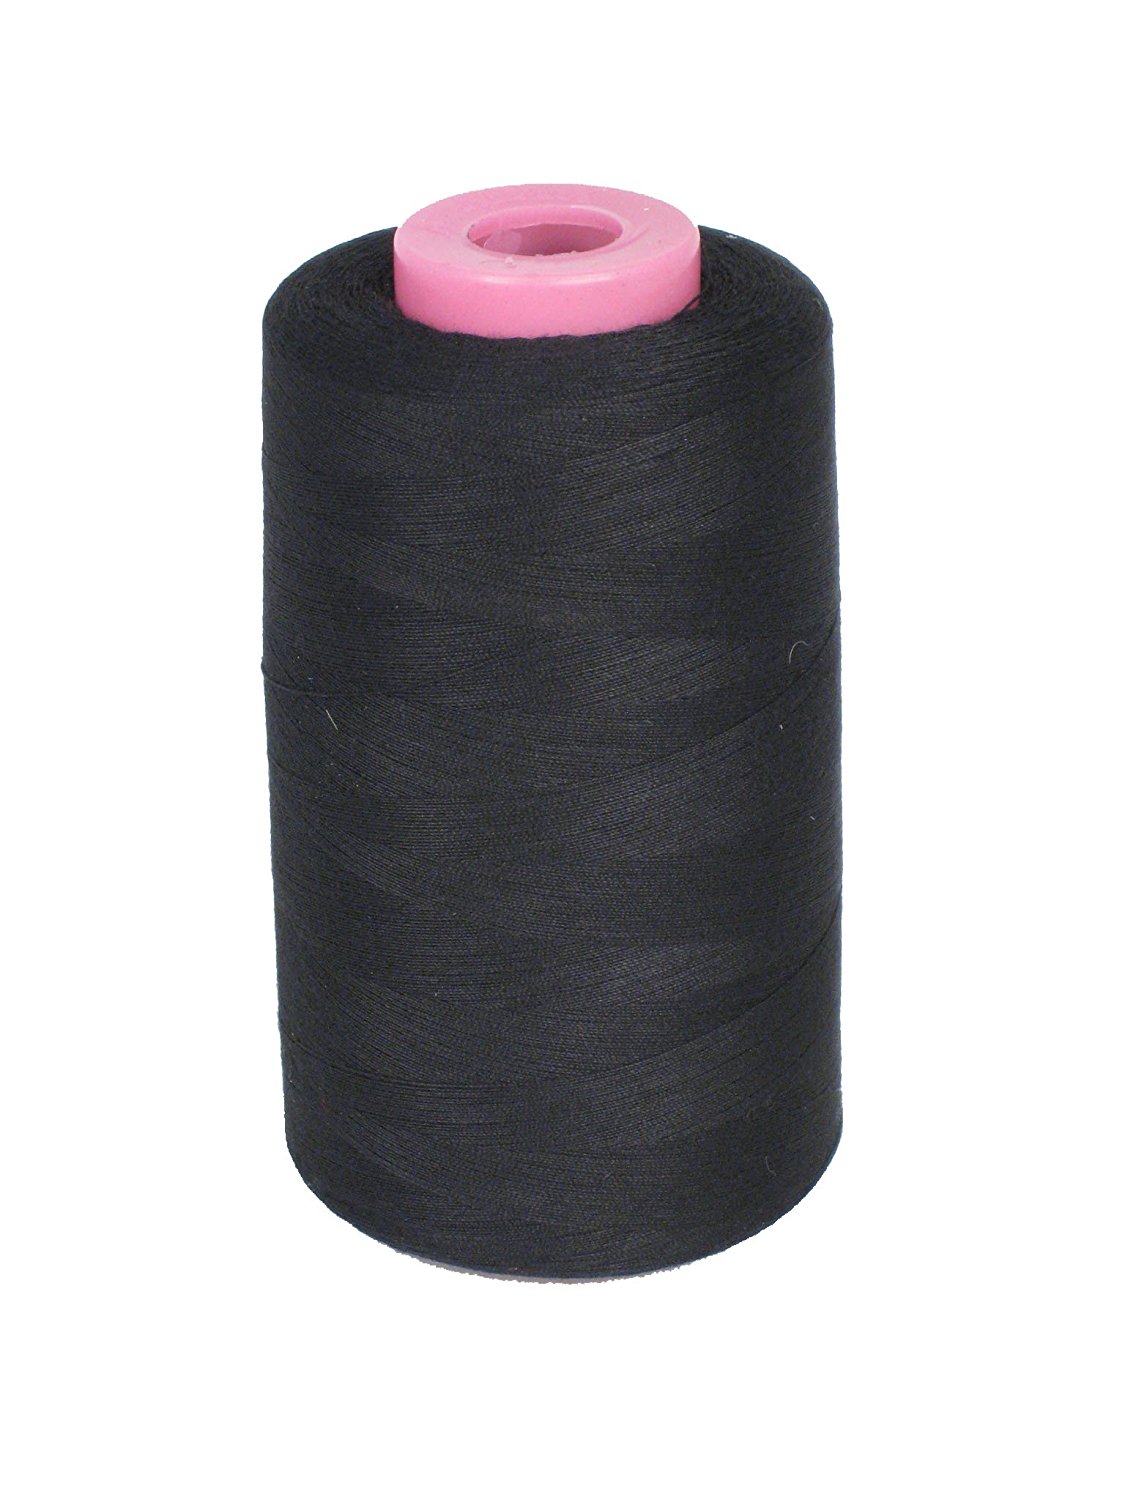 Black Serger Thread (overlock) 6,000 yards, 100% Spun Polyester